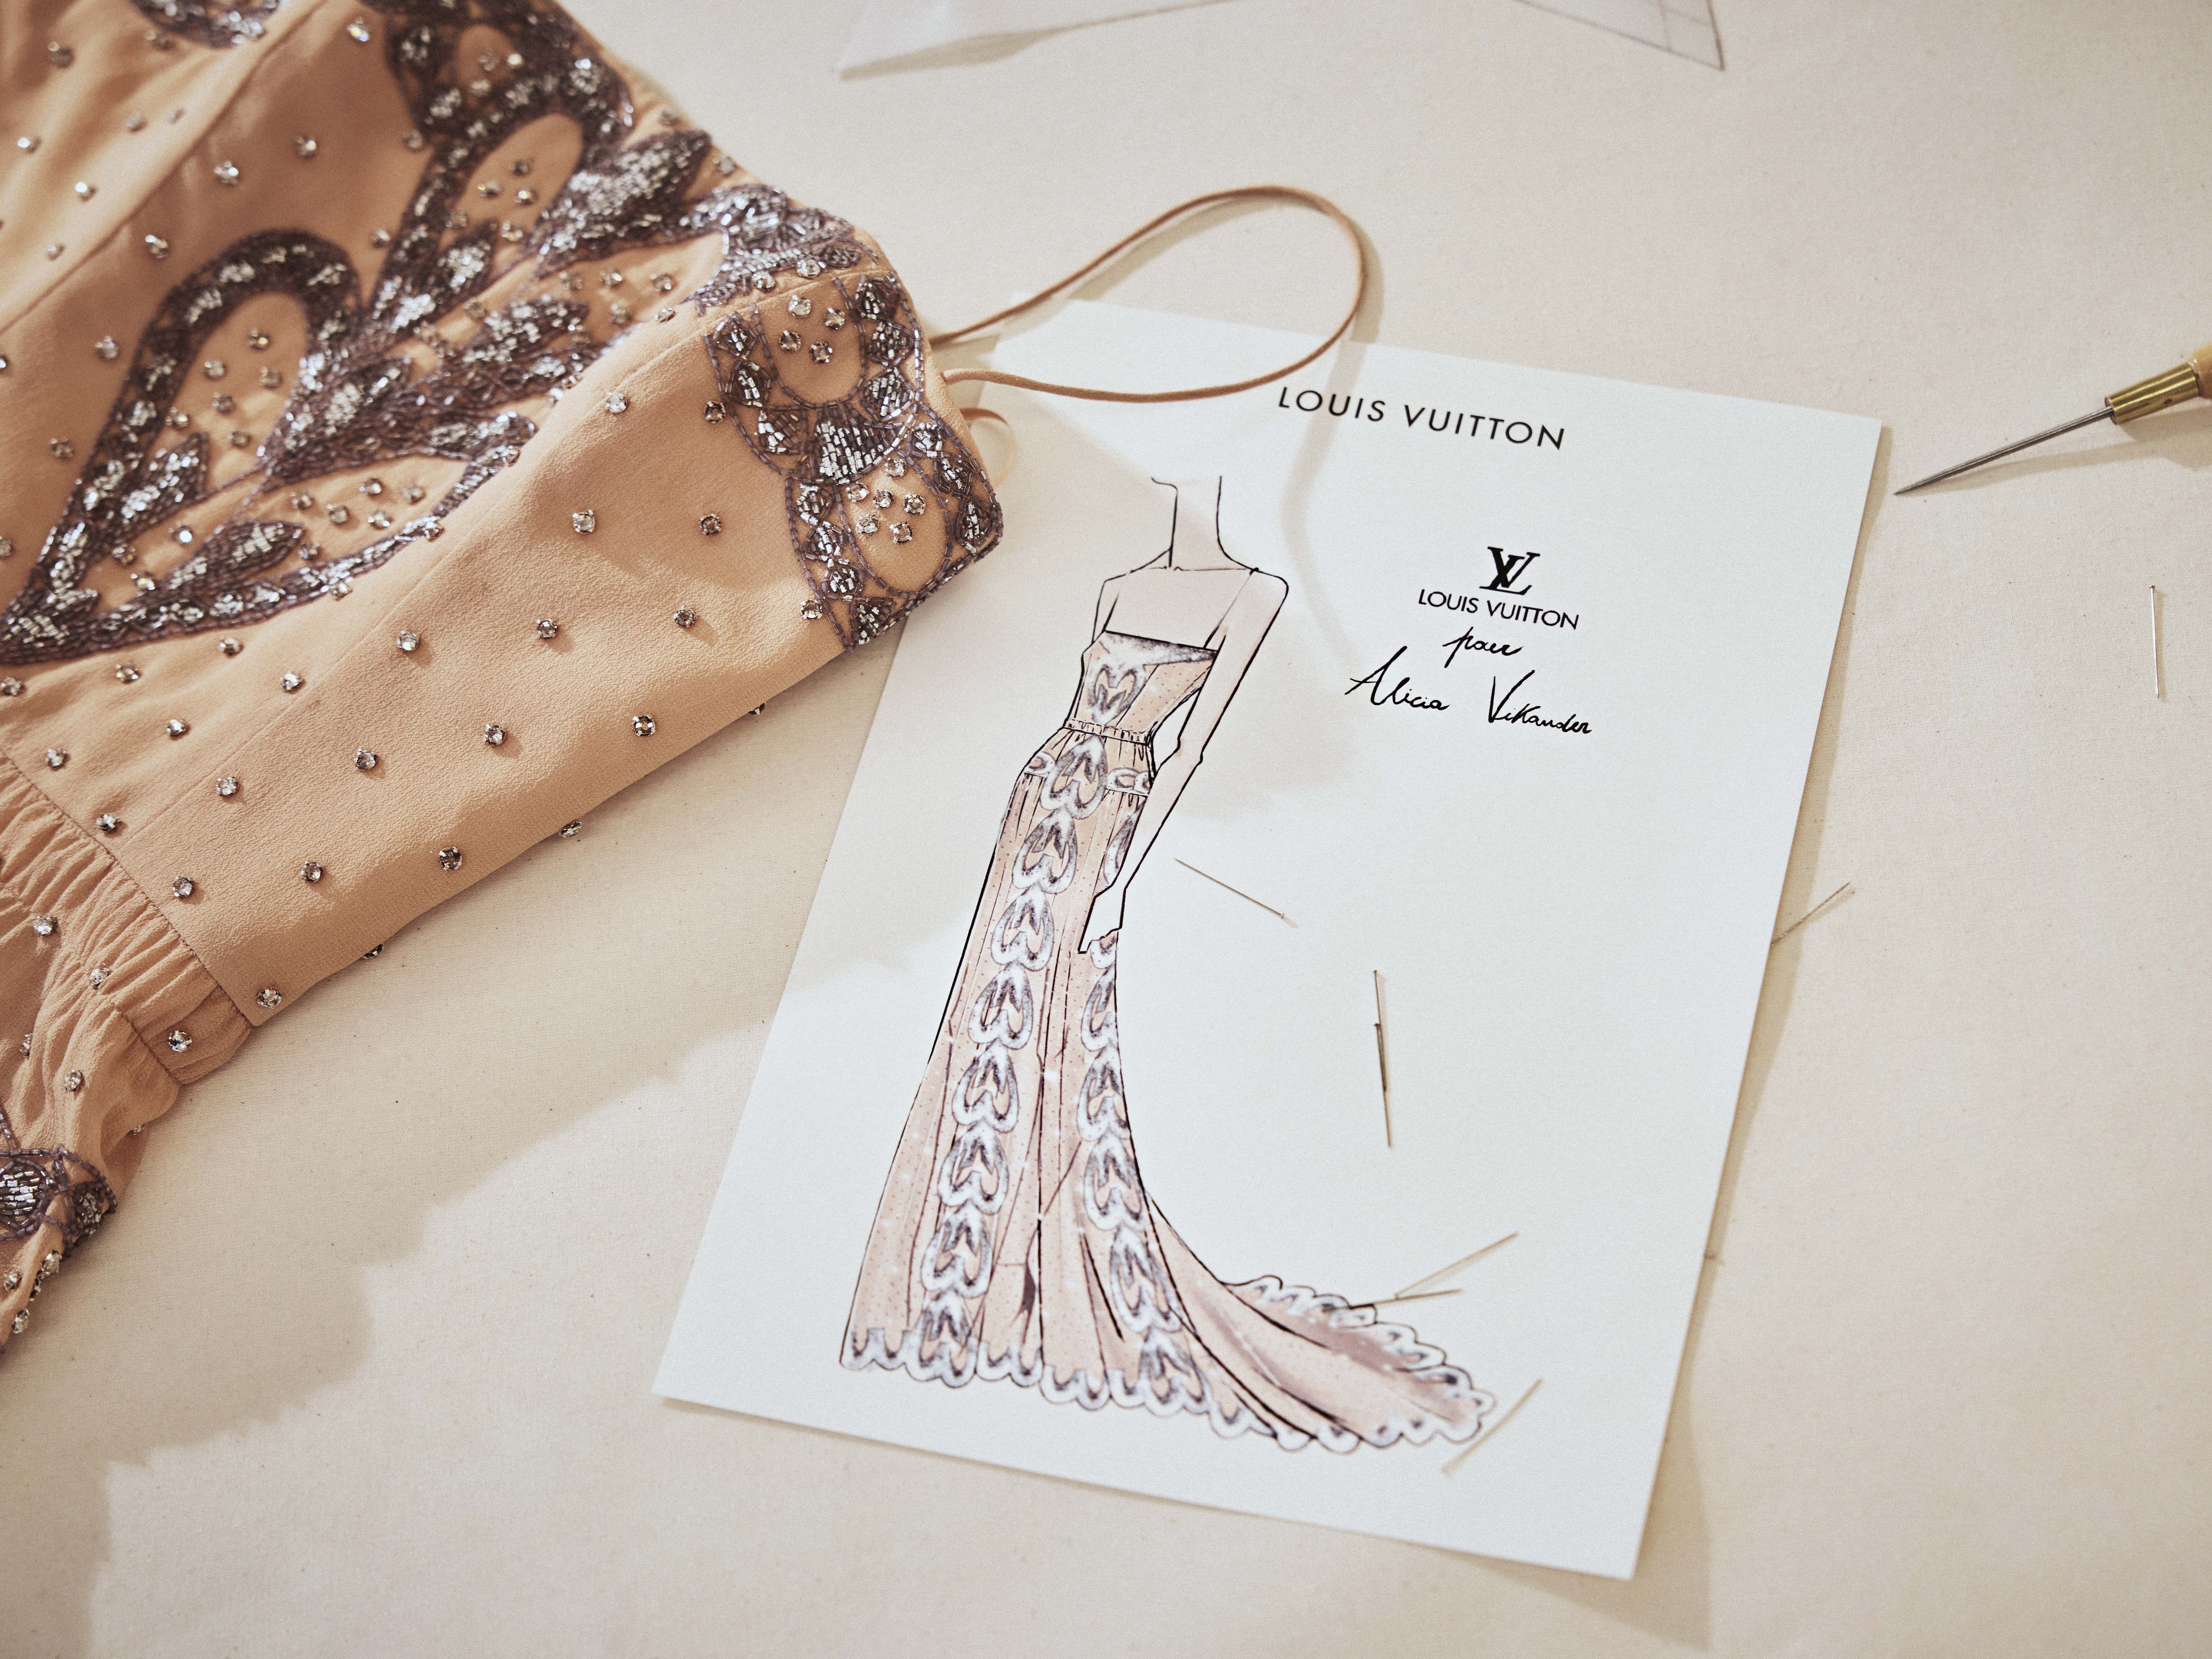 Louis Vuitton on X: The energy of #AliciaVikander. The Oscar